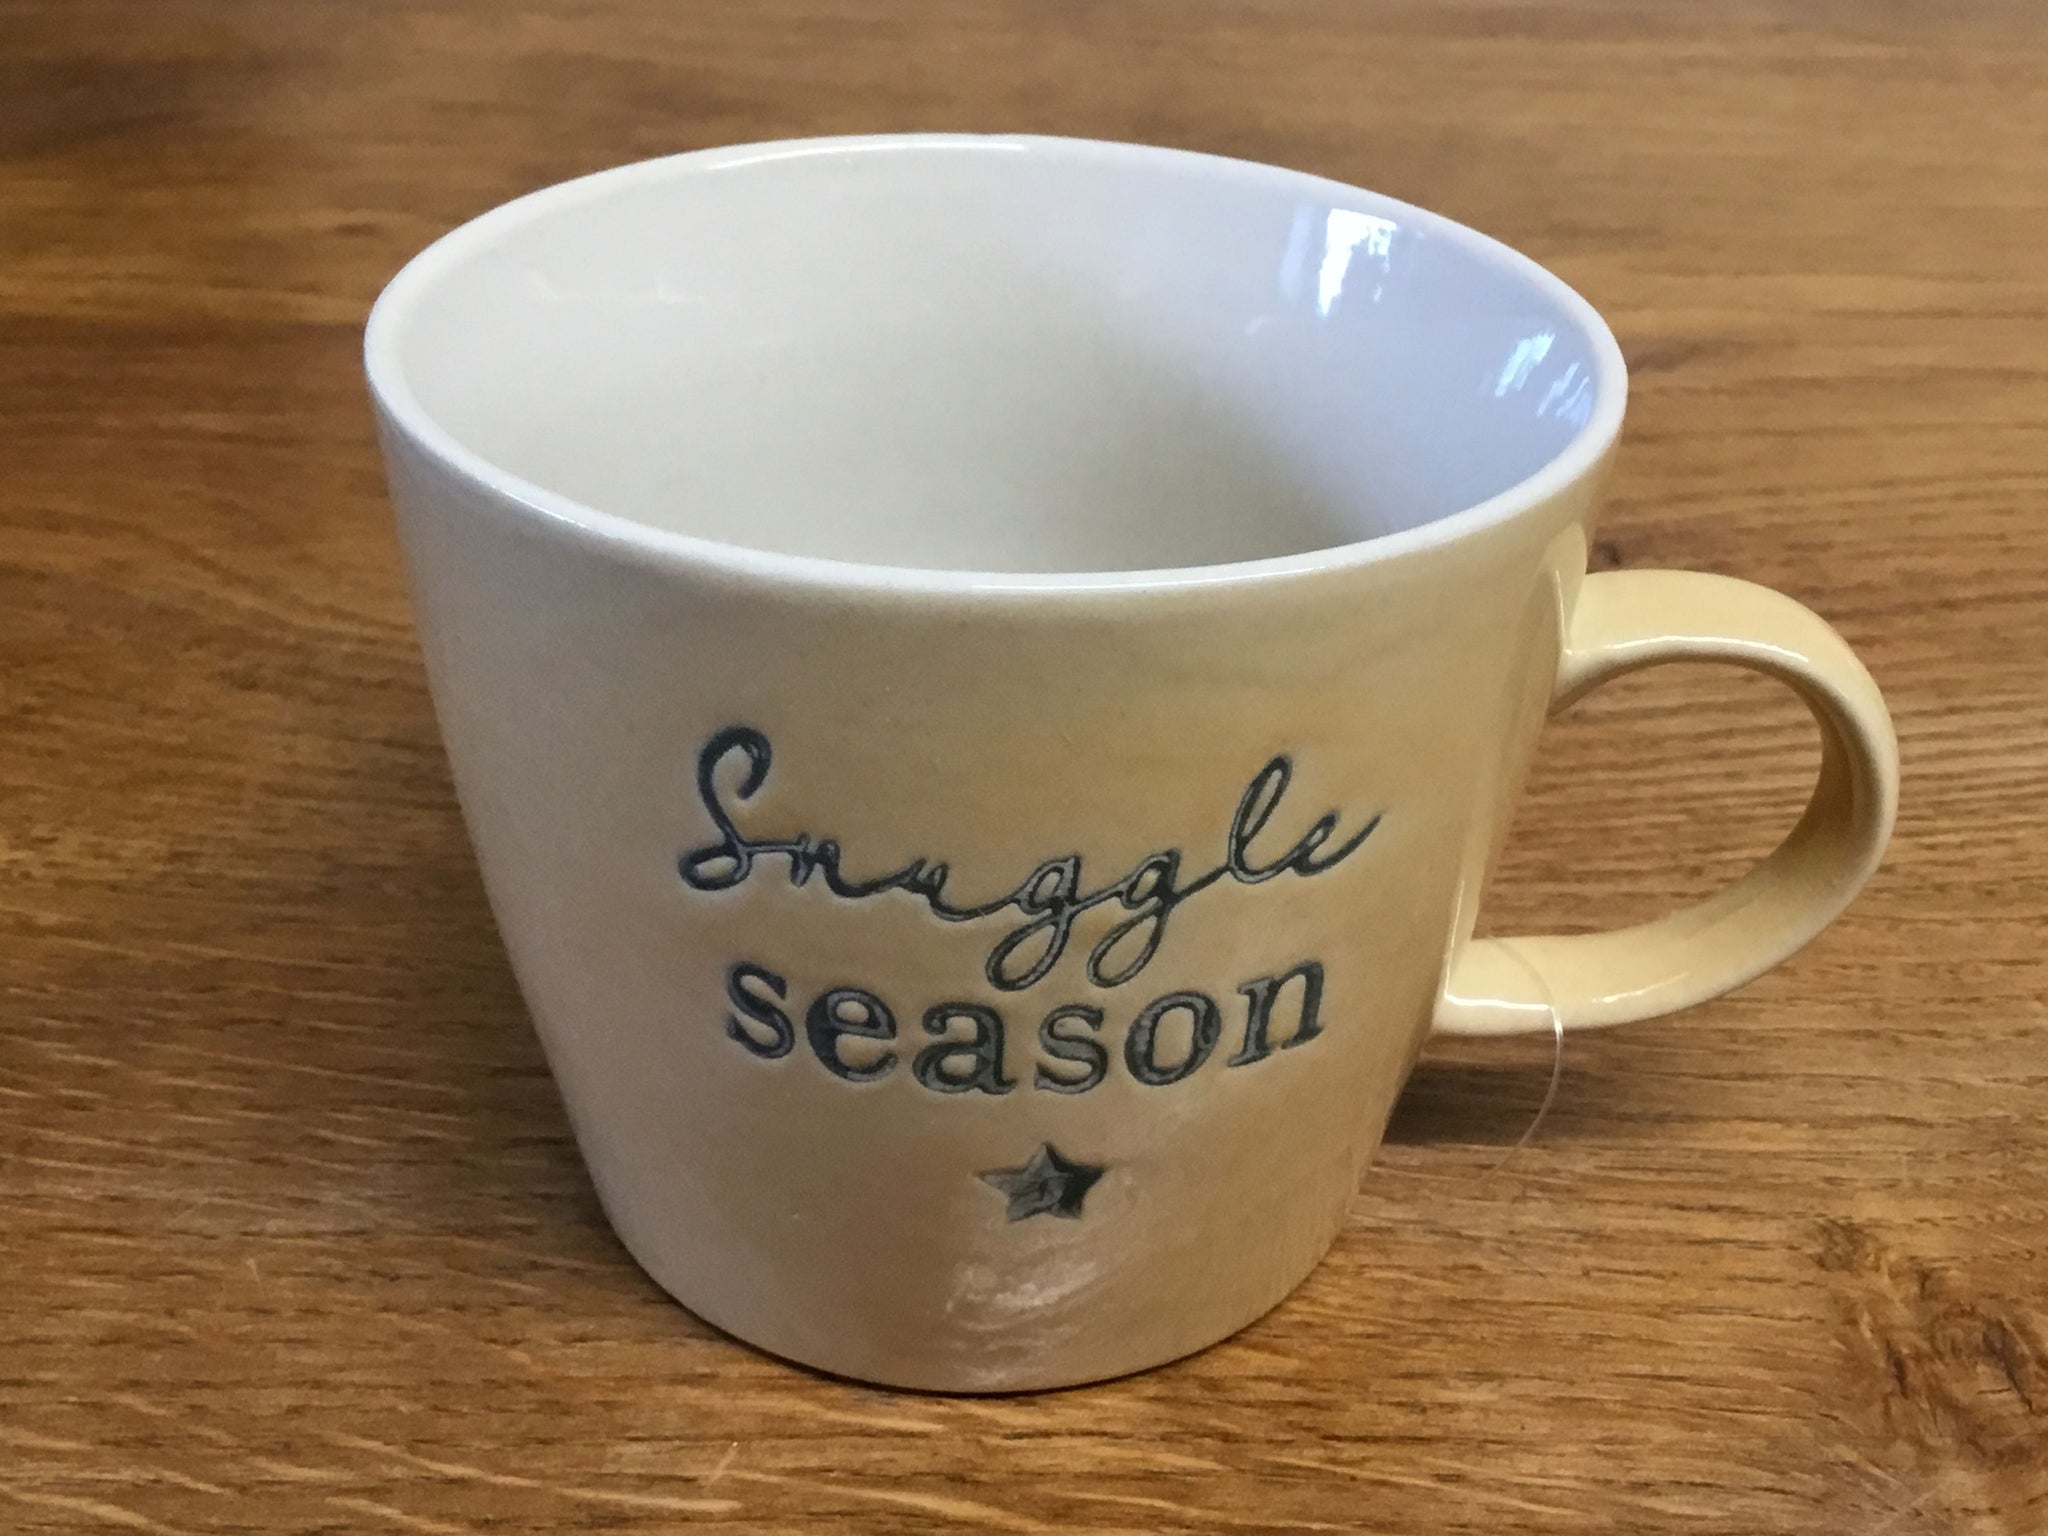 'Snuggle Season' Mug